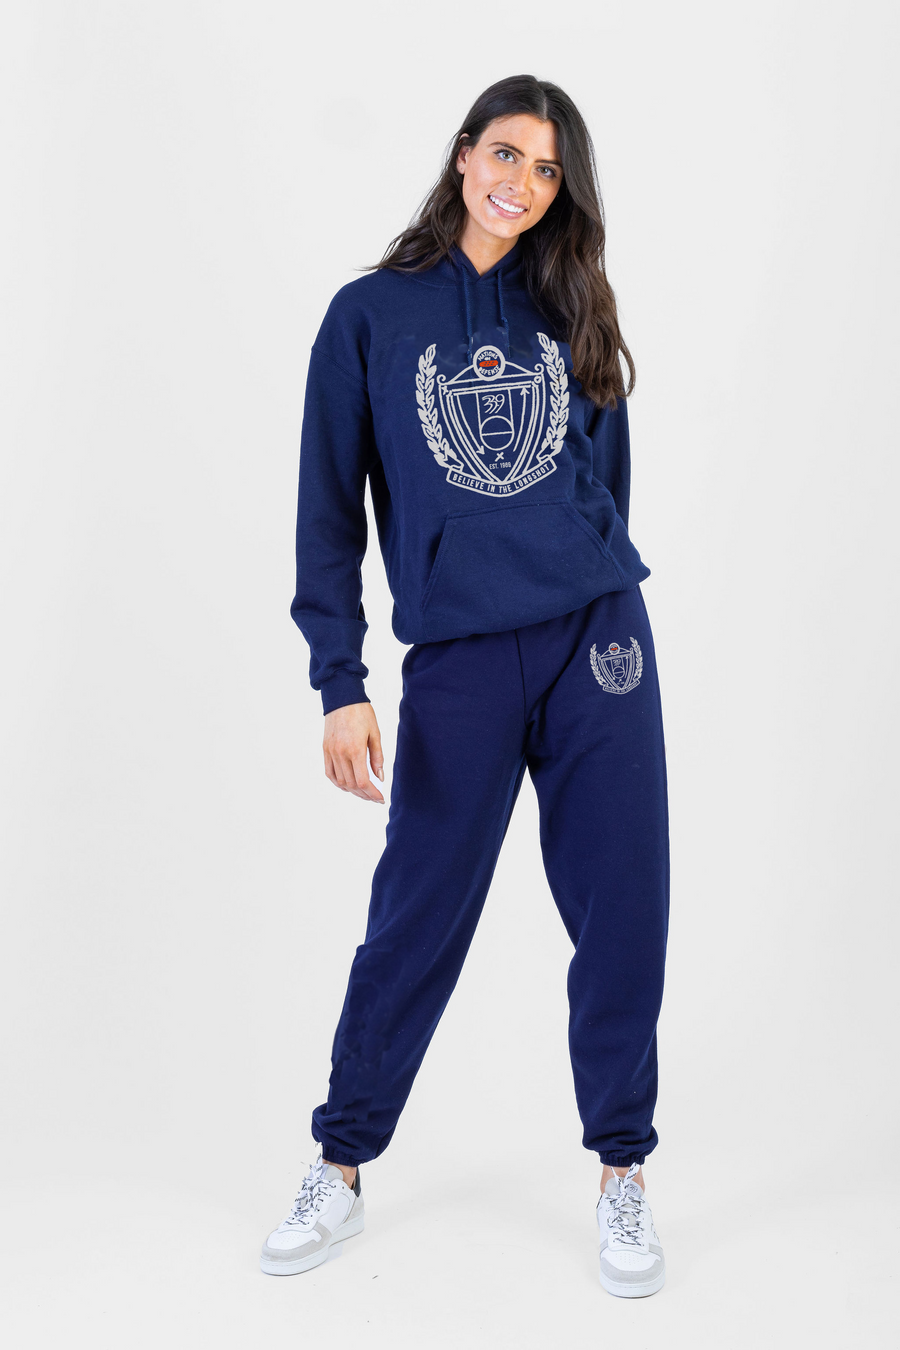 Navy Sweatsuit - Crest